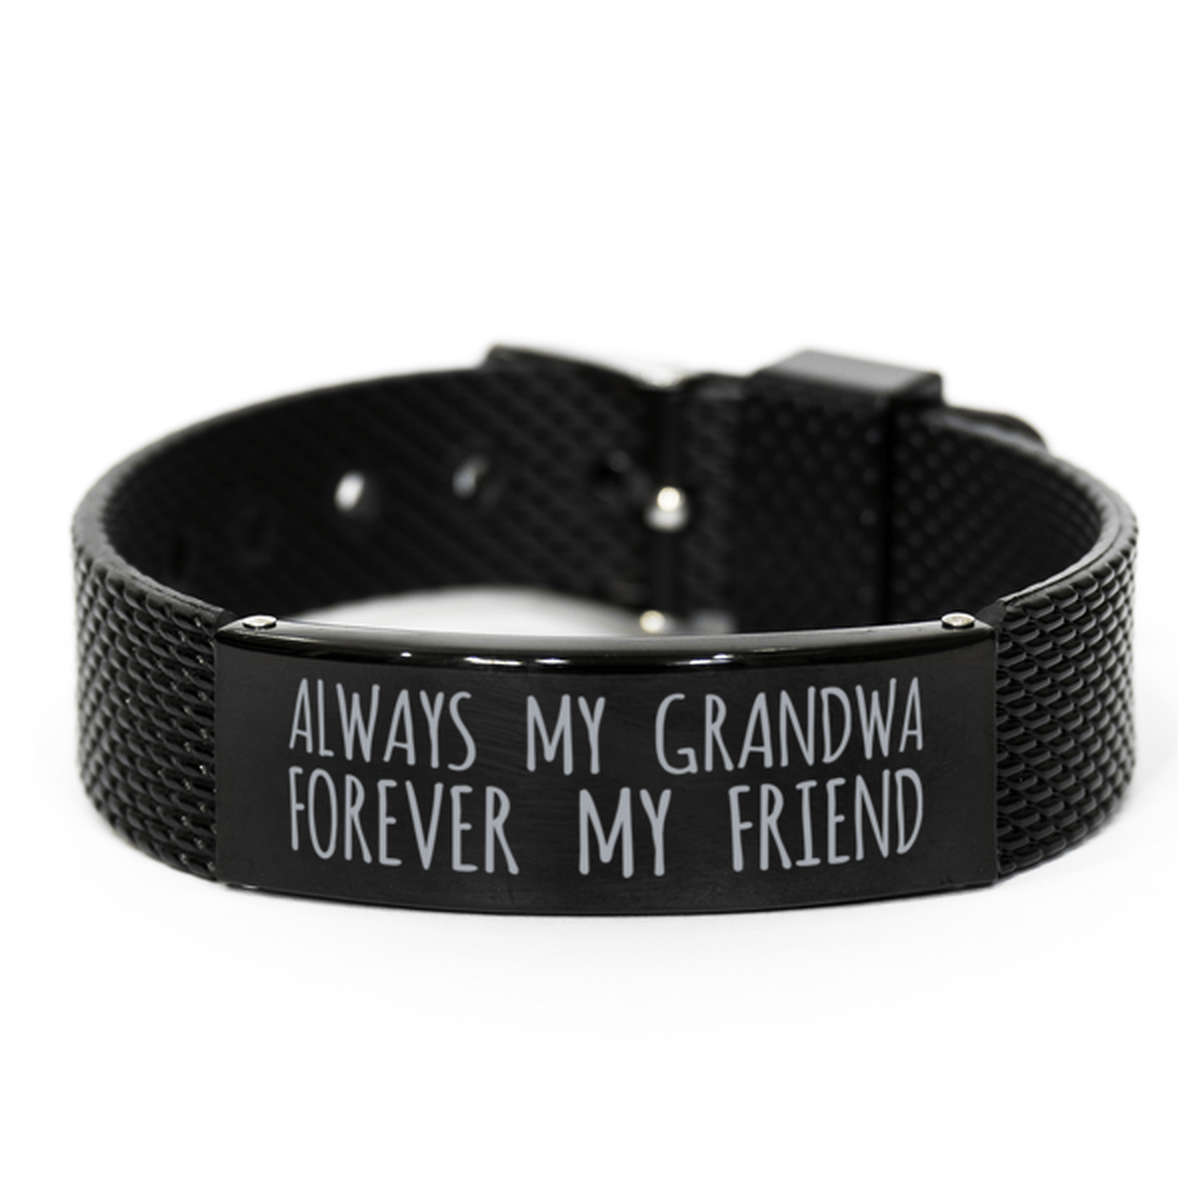 Inspirational Grandwa Black Shark Mesh Bracelet, Always My Grandwa Forever My Friend, Best Birthday Gifts for Family Friends